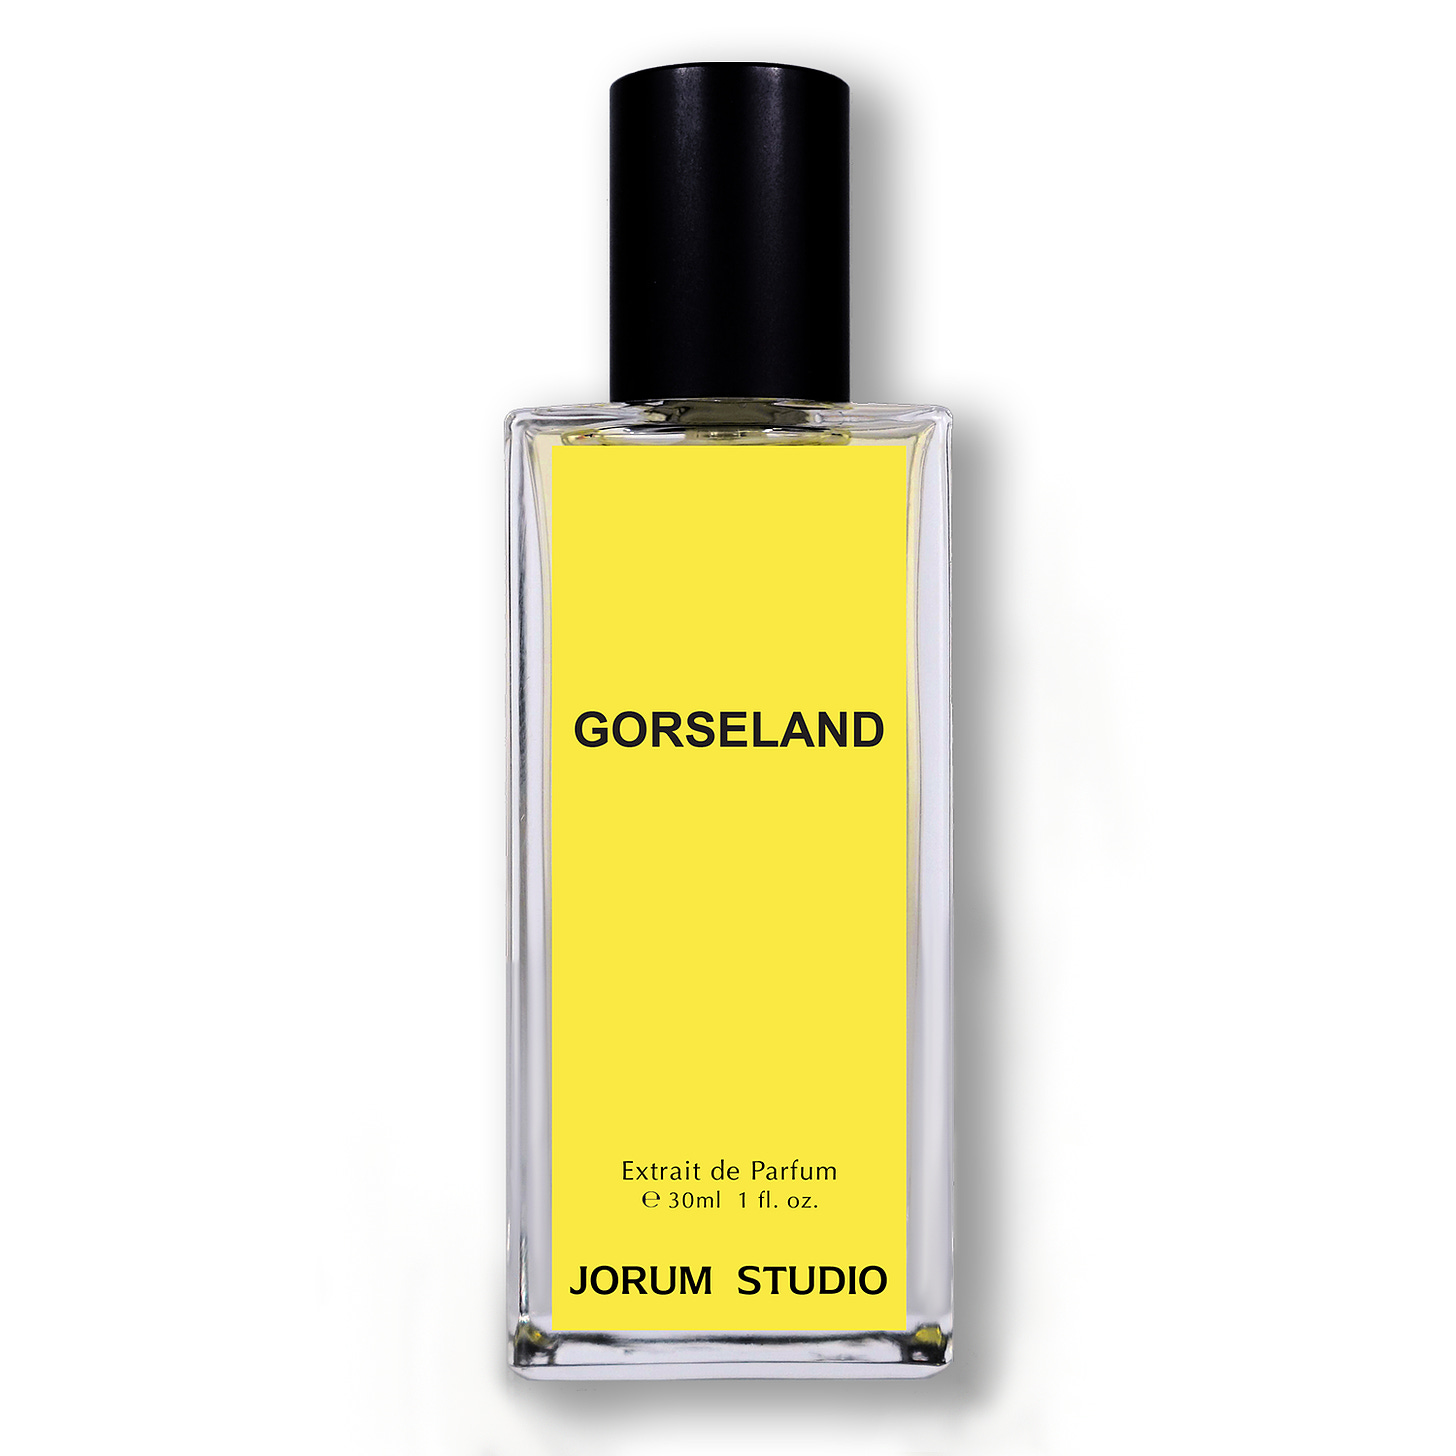 Gorseland Extrait de Parfum 30ml by Jorum Studio